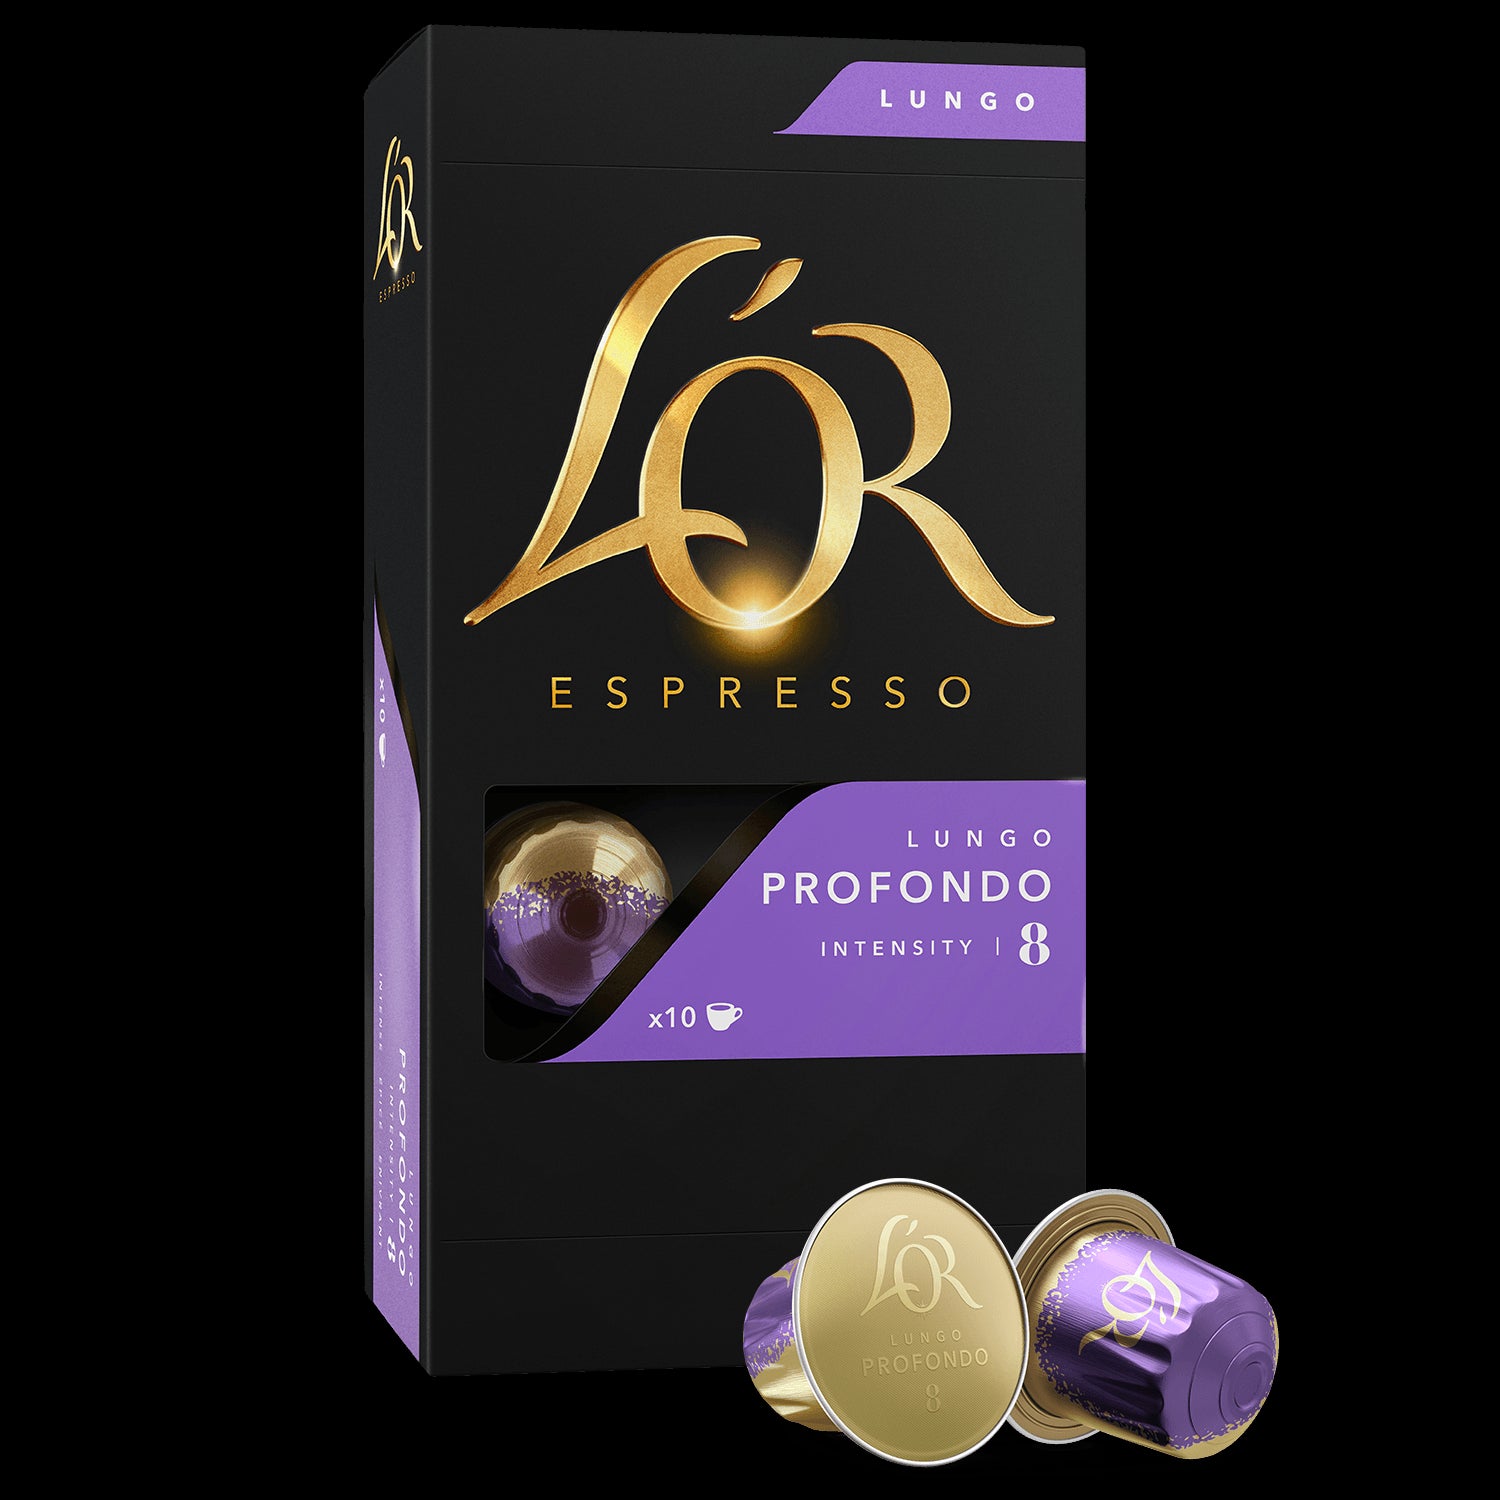 Douwe Egberts L'Or capsules de café Espresso Lungo Profondo